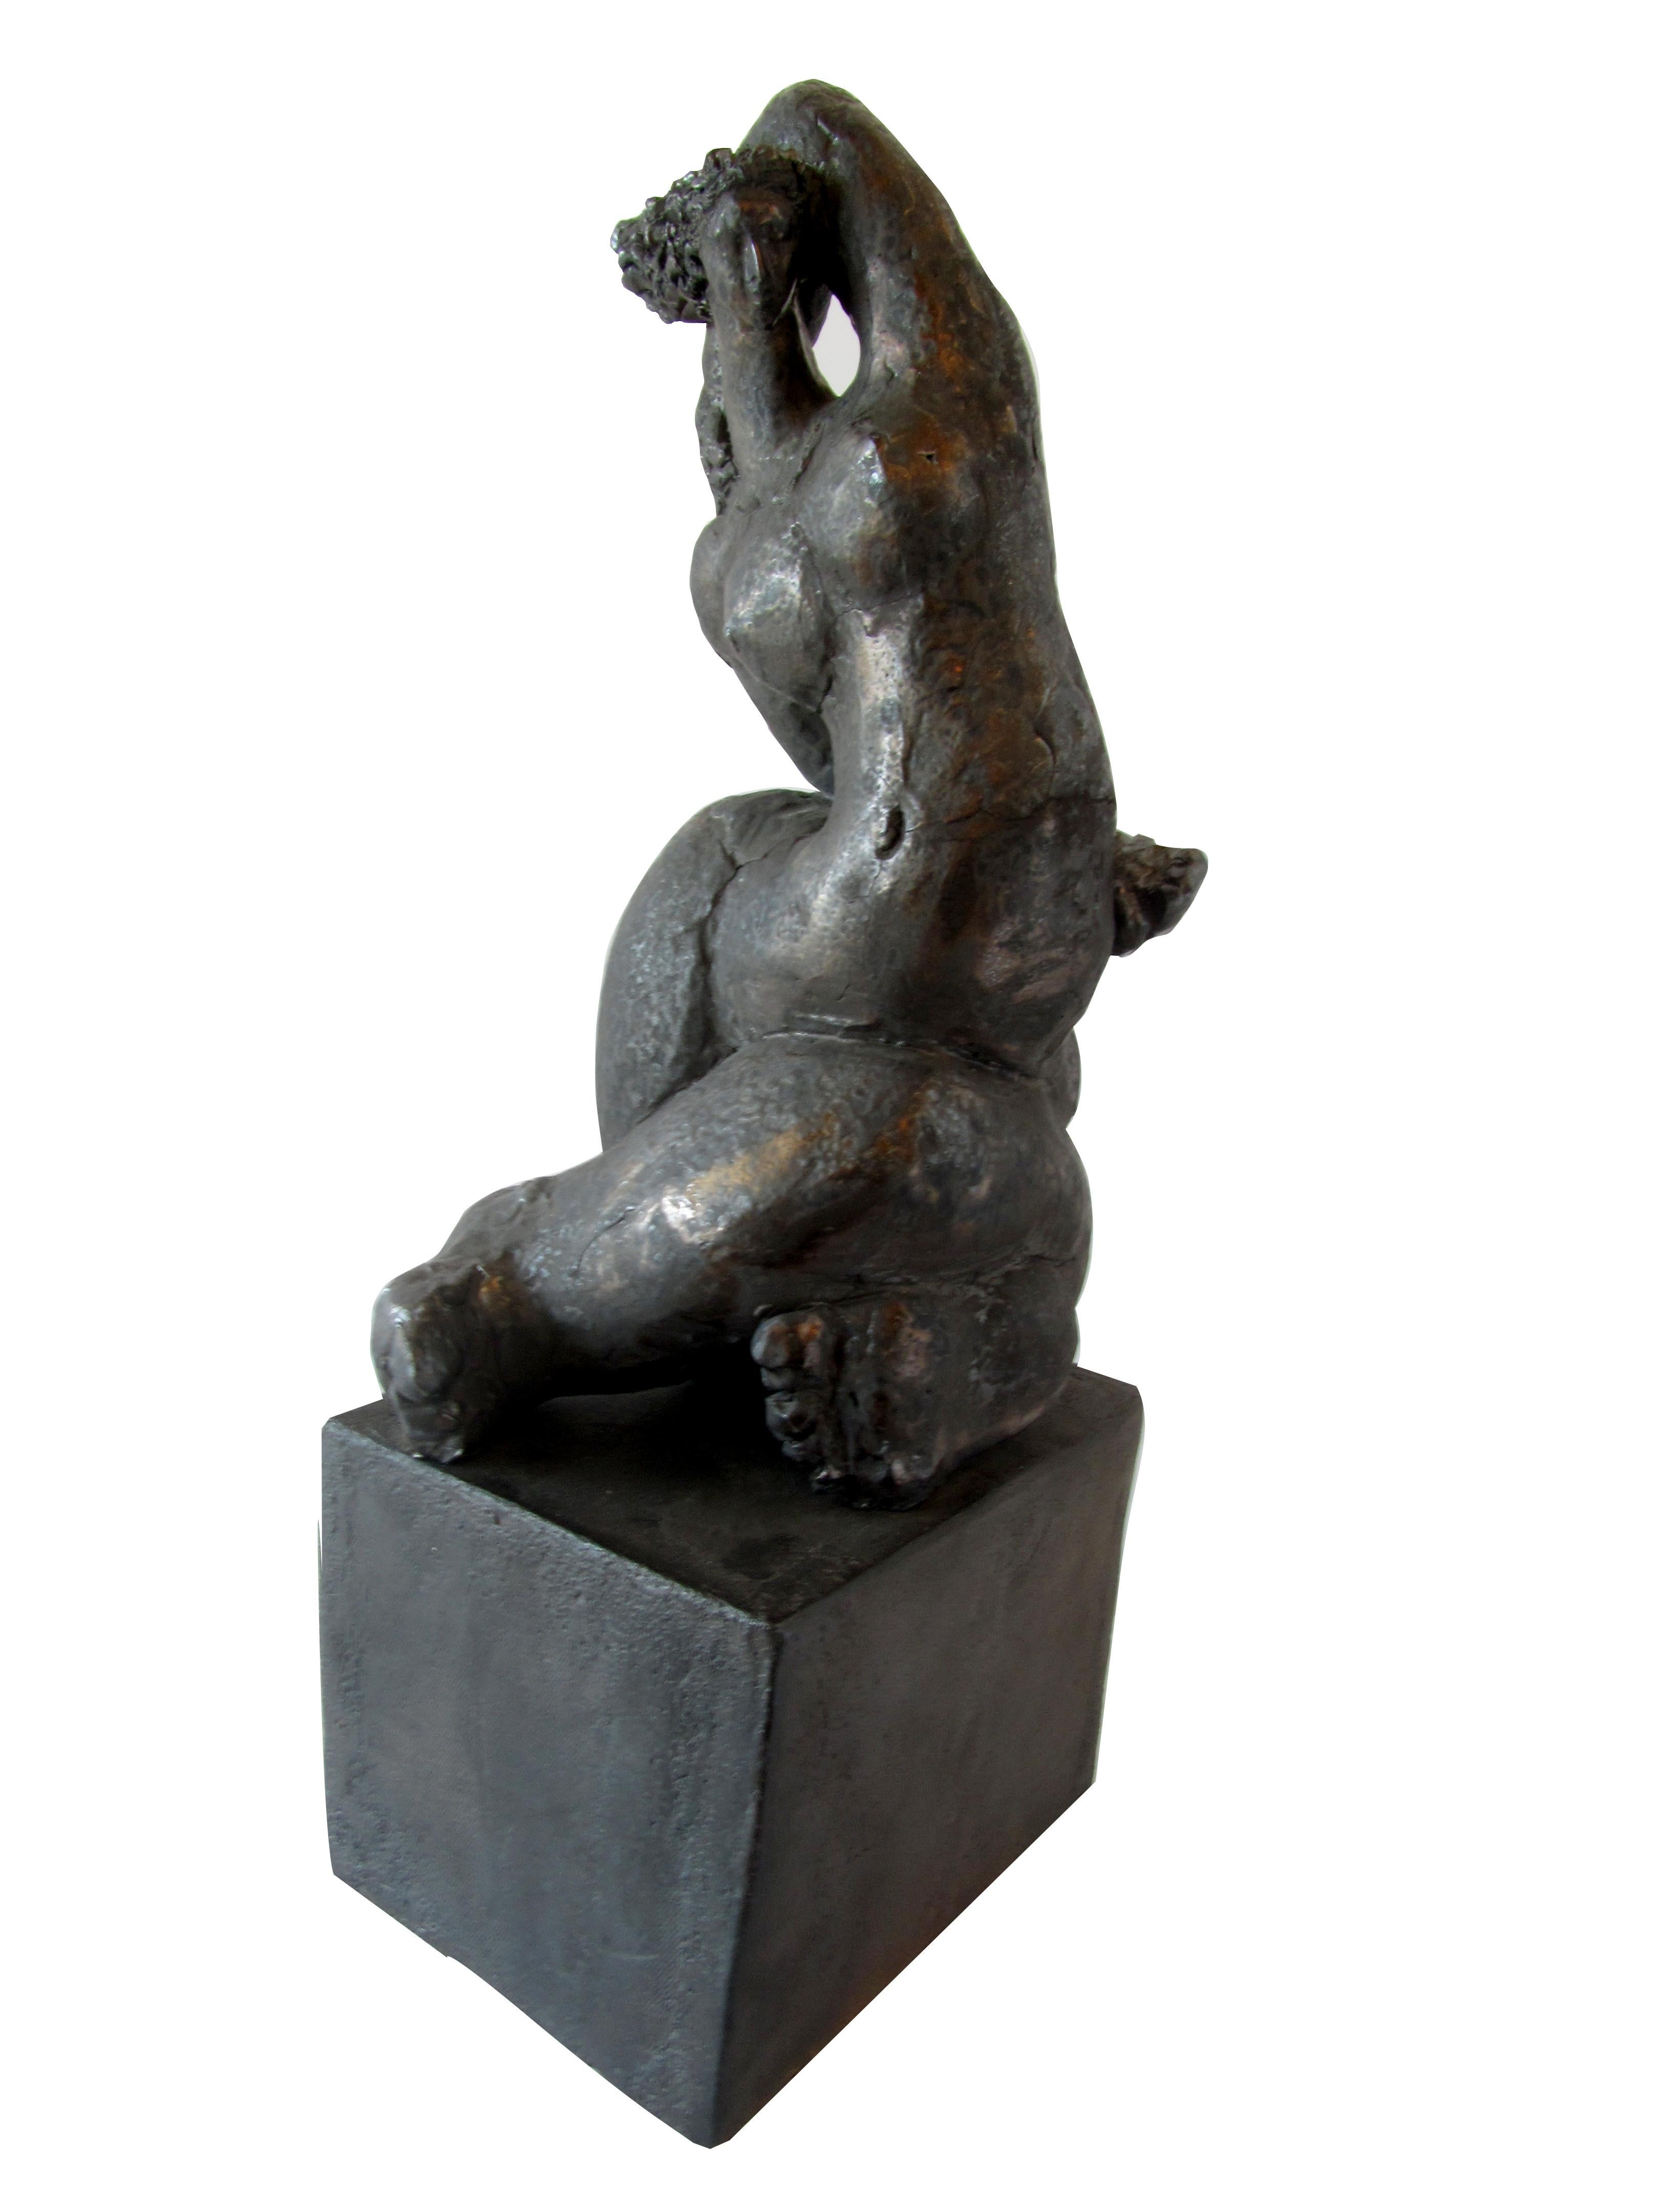 Contemporary French Modern Glazed Terracotta Figural Sculpture, Michele Raymond, 2007